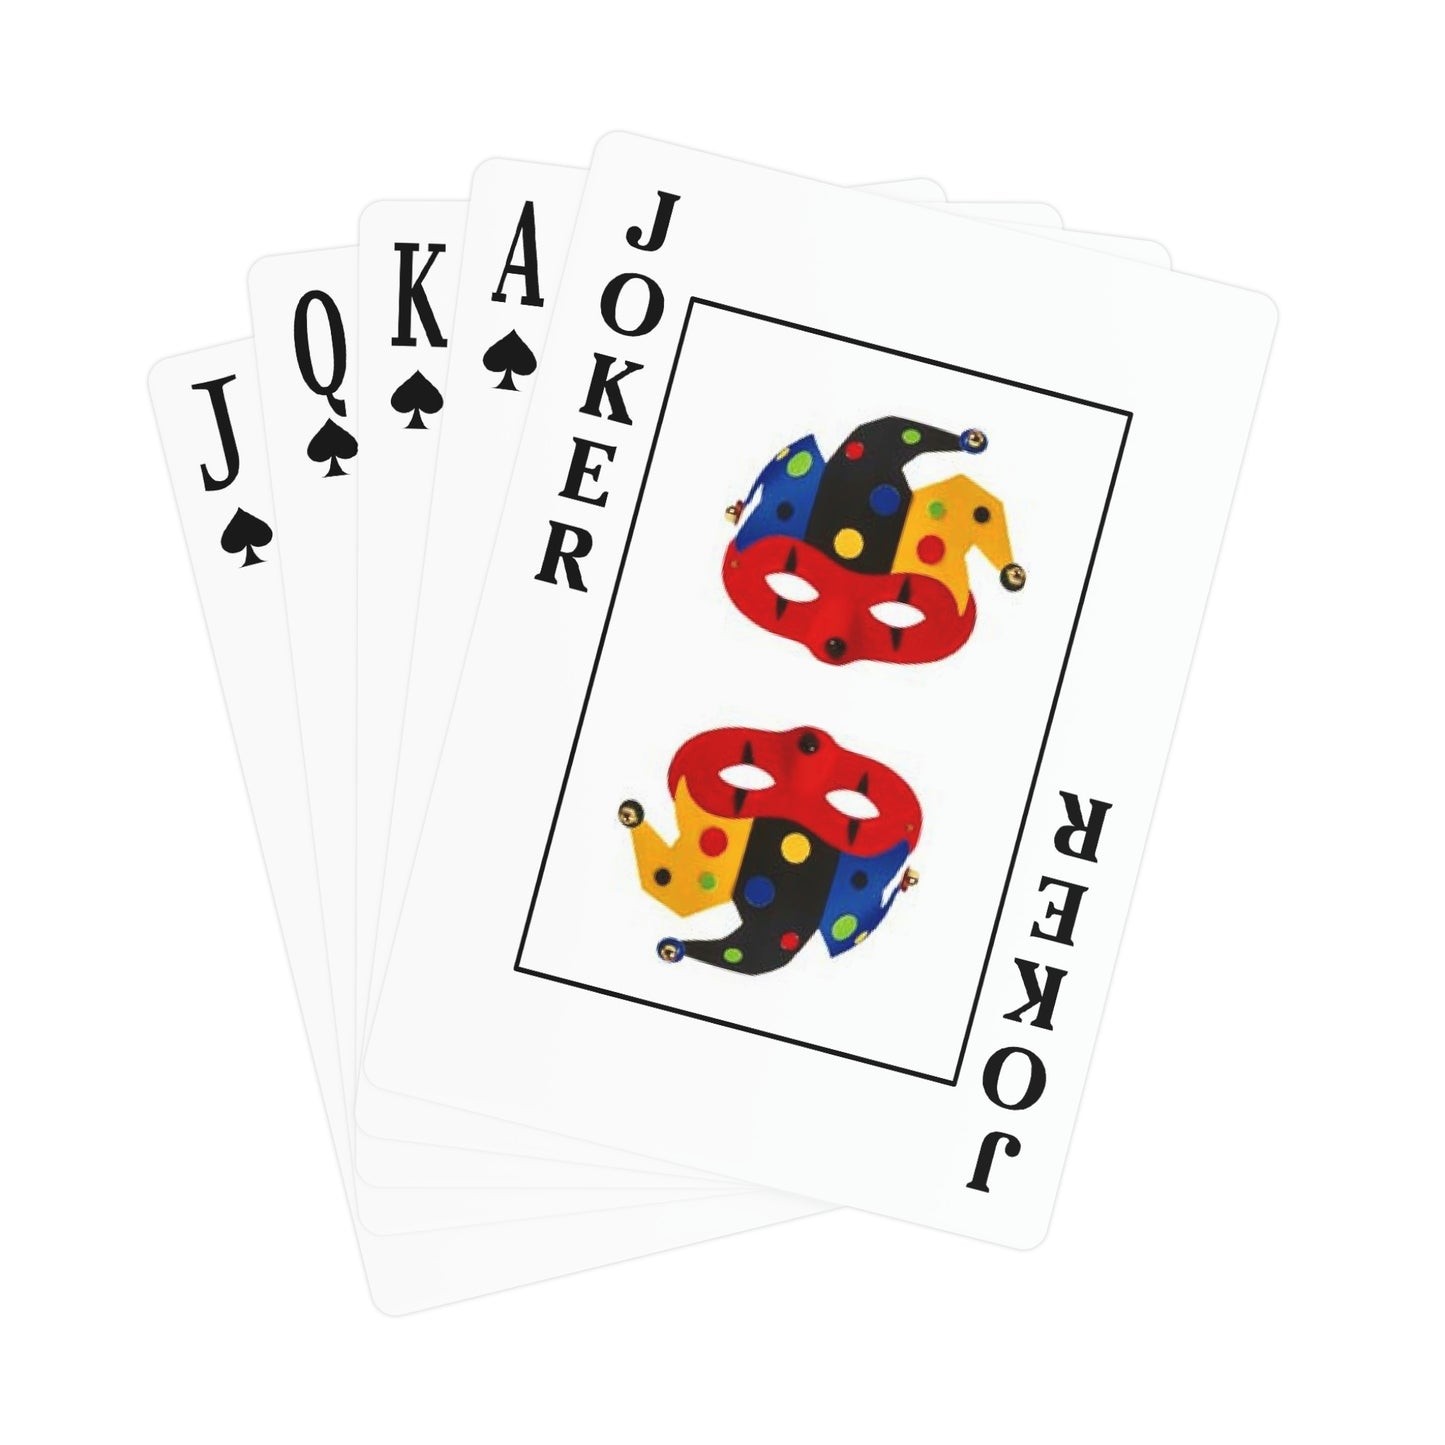 Make Or Break In Marrakesh - Playing Cards